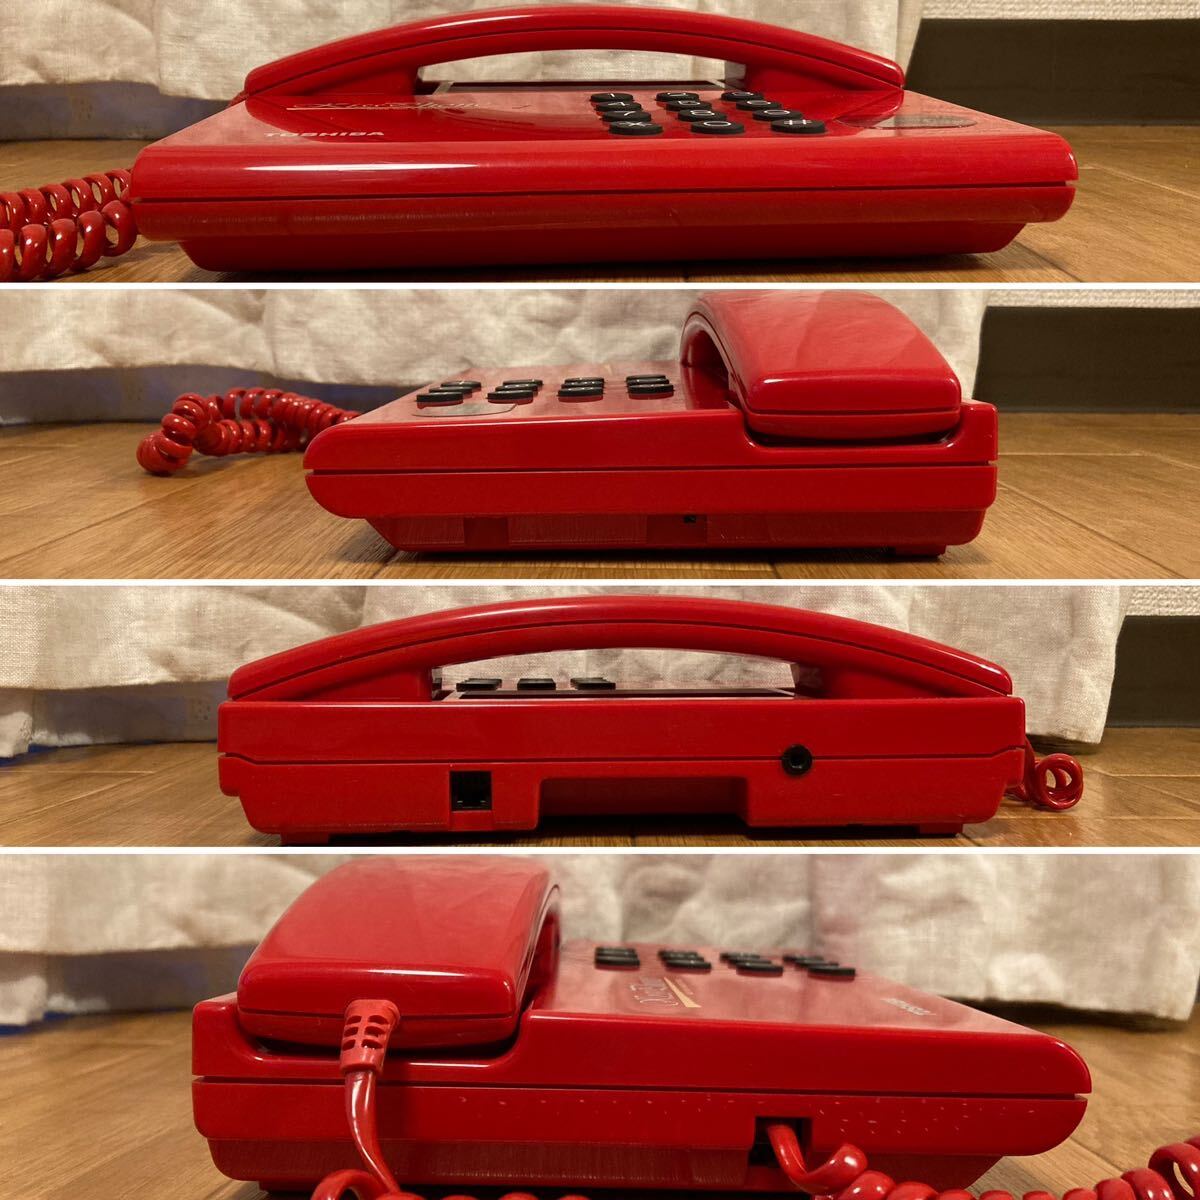  Kawai i! Toshiba telephone machine Kiss Phone FF-41RD fixation telephone telephone red red Showa Retro interior 